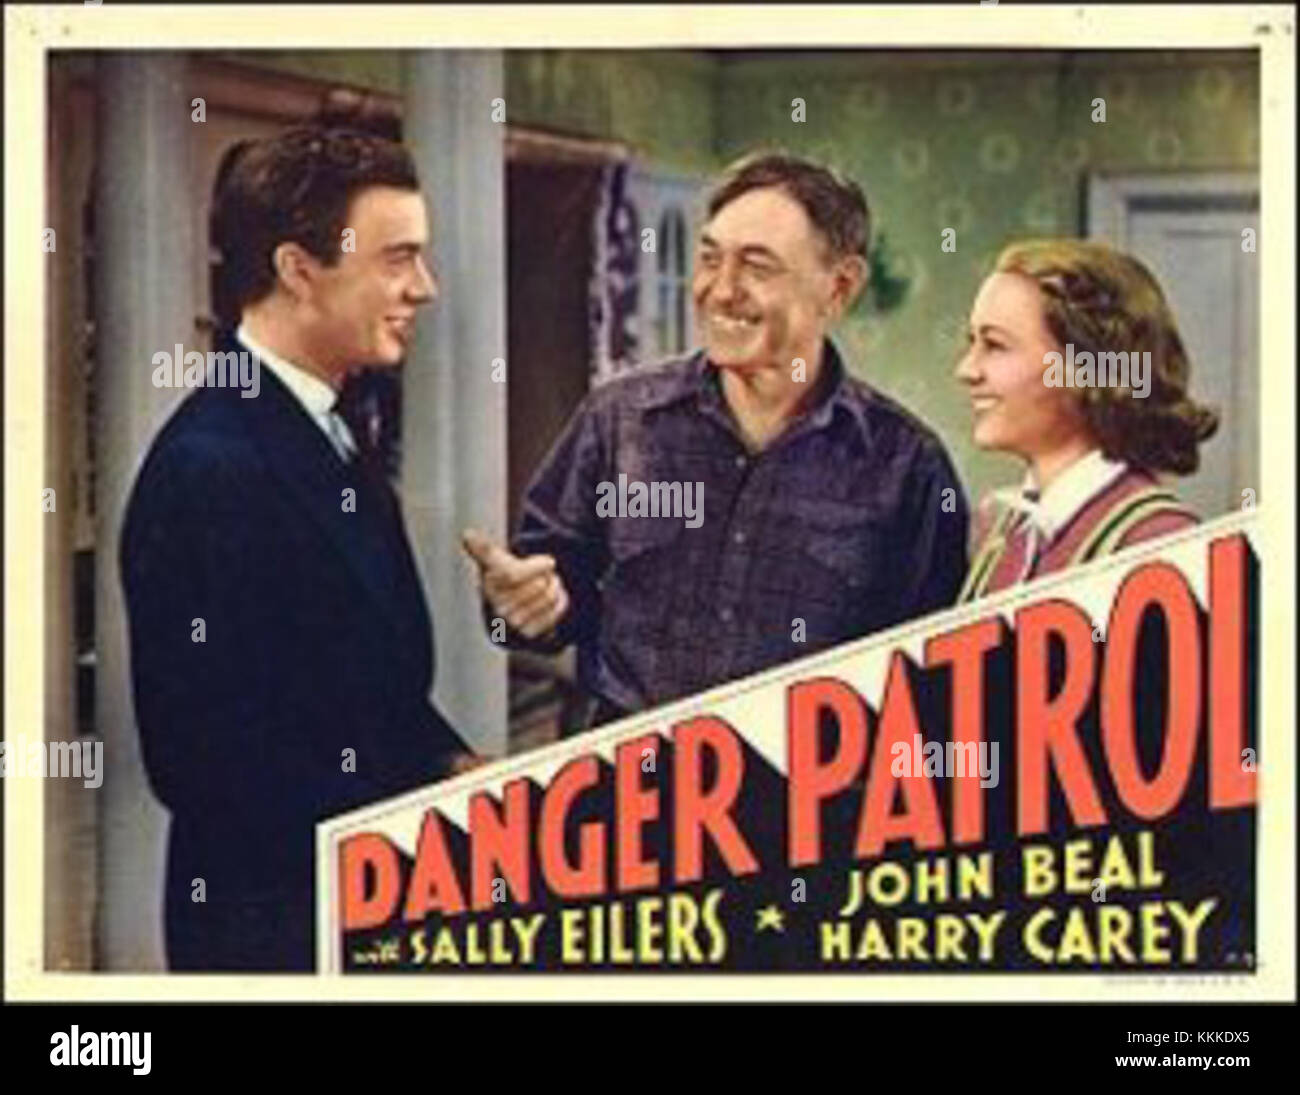 DangerPatrol.1937.LobbyCard Stock Photo